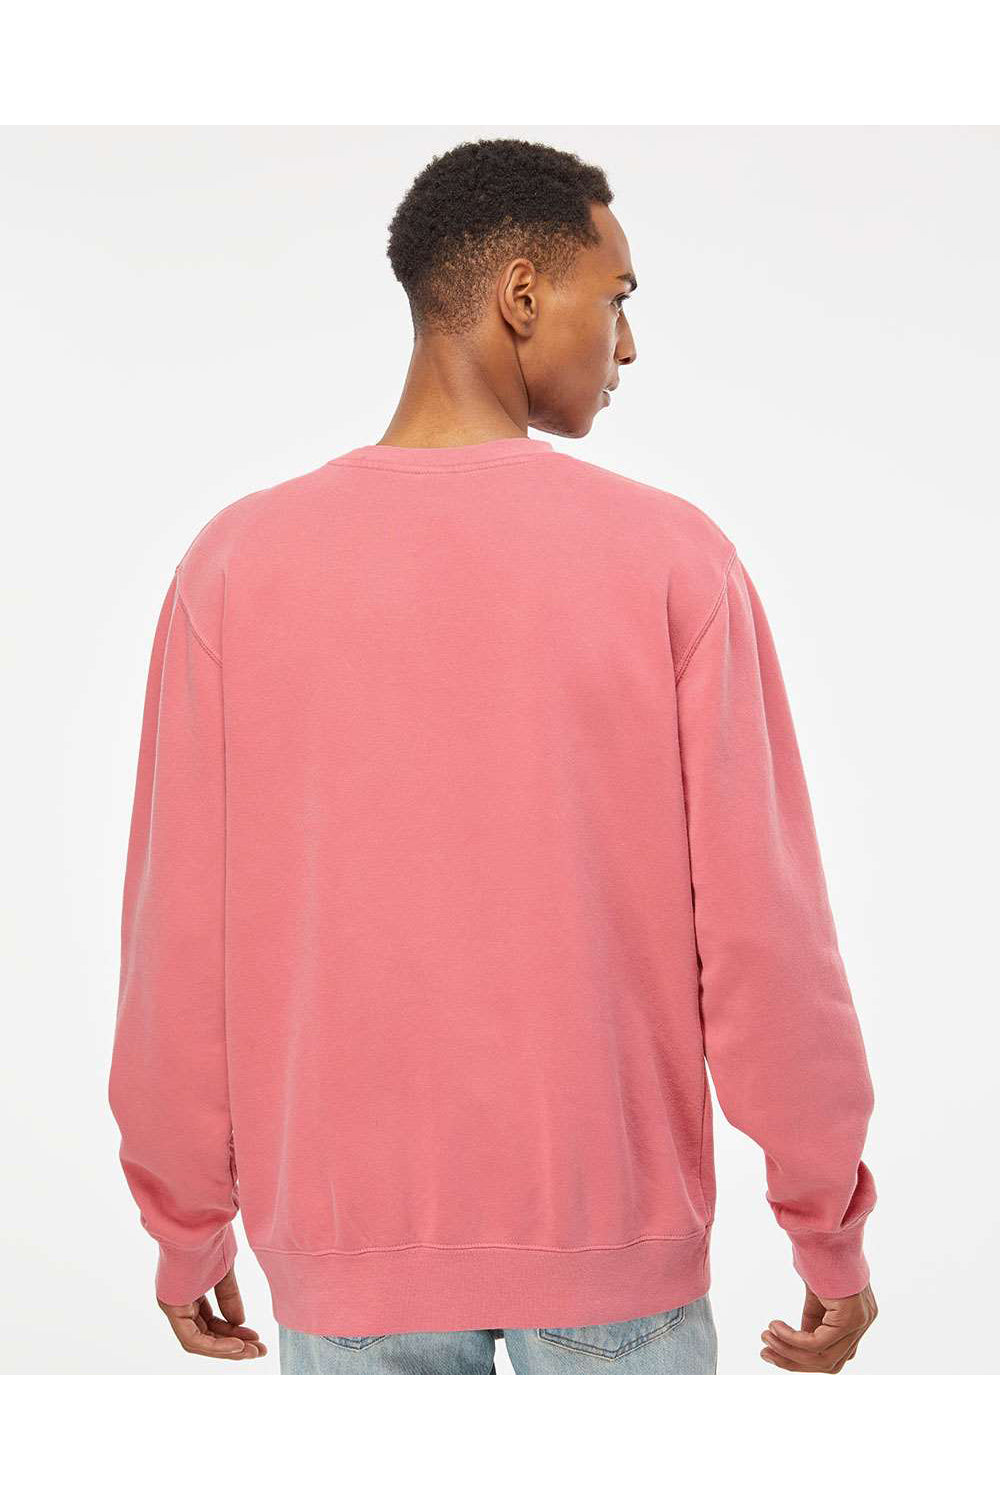 Independent Trading Co. PRM3500 Mens Pigment Dyed Crewneck Sweatshirt Pink Model Back